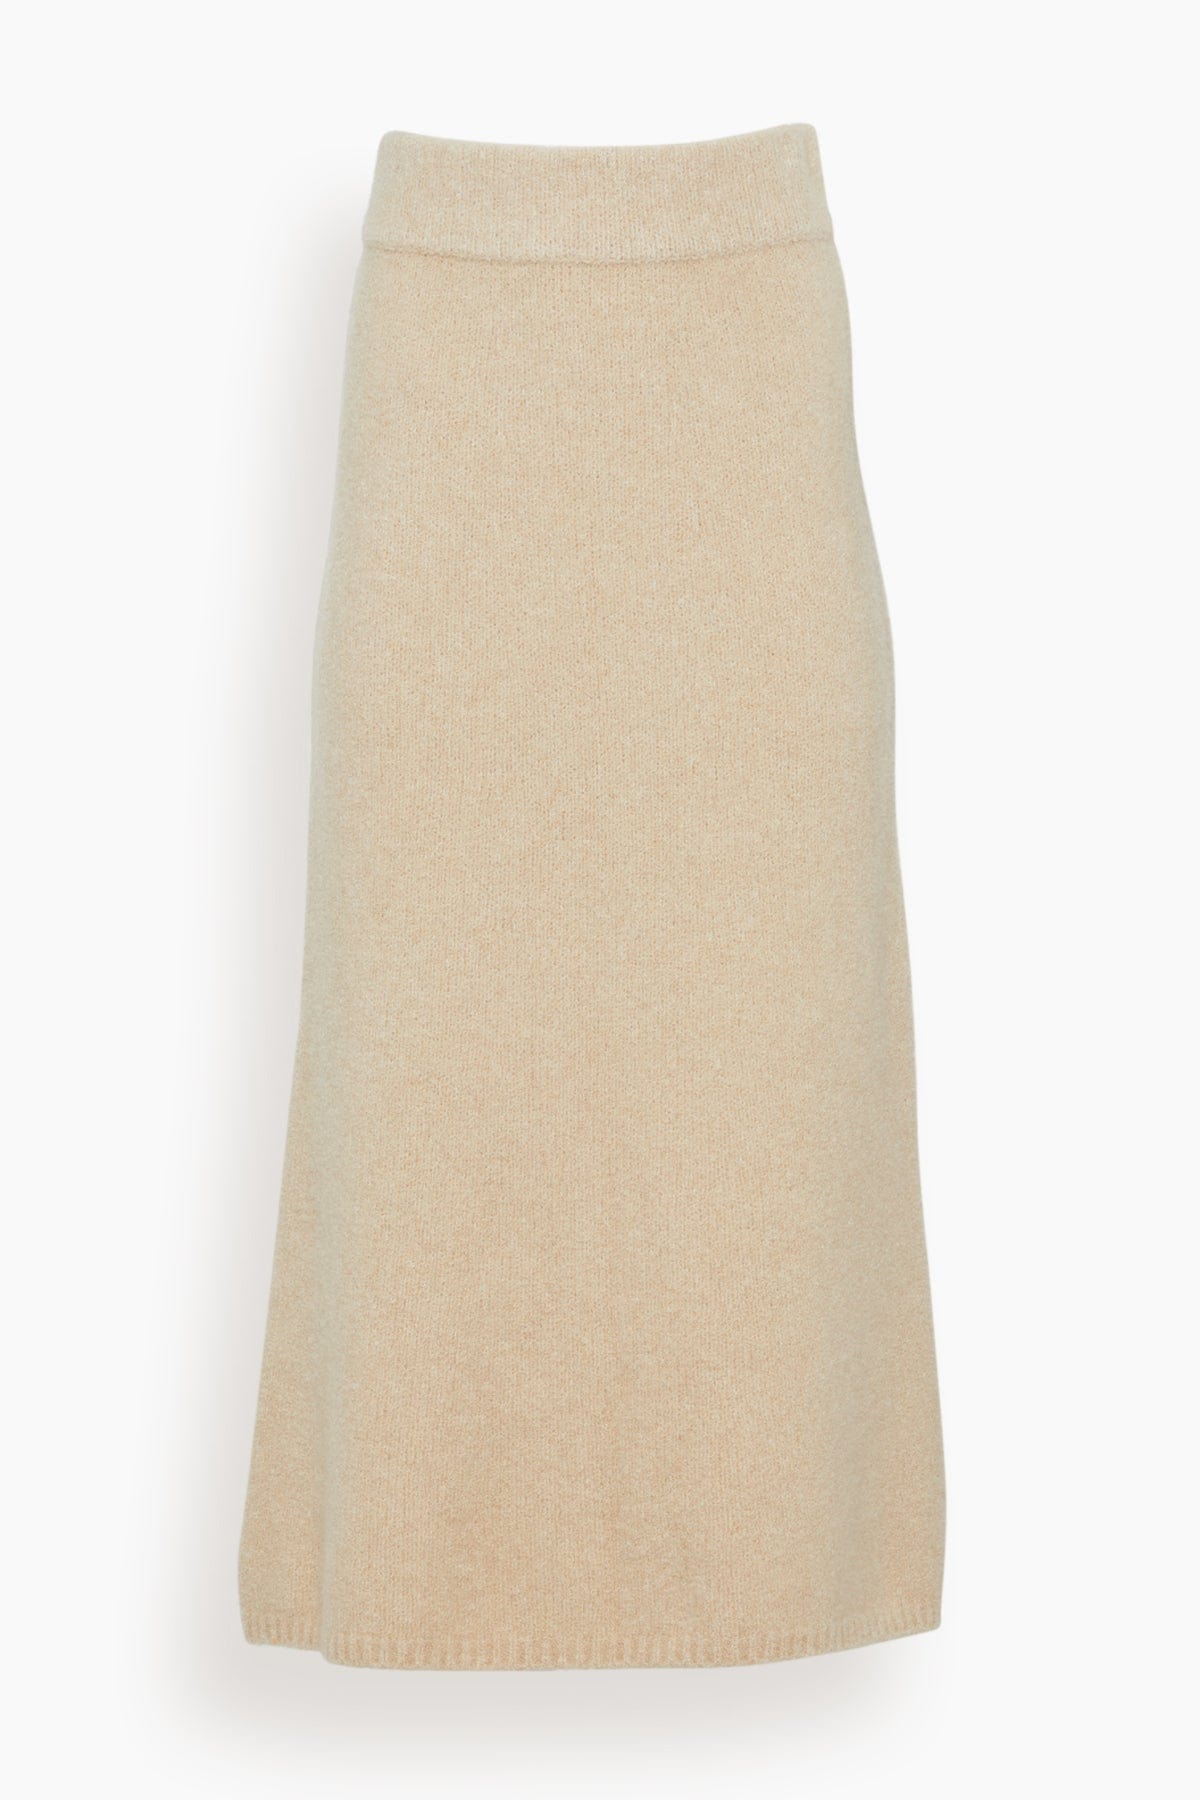 Lisa Yang Skirts Kael Skirt in Sand Boucle